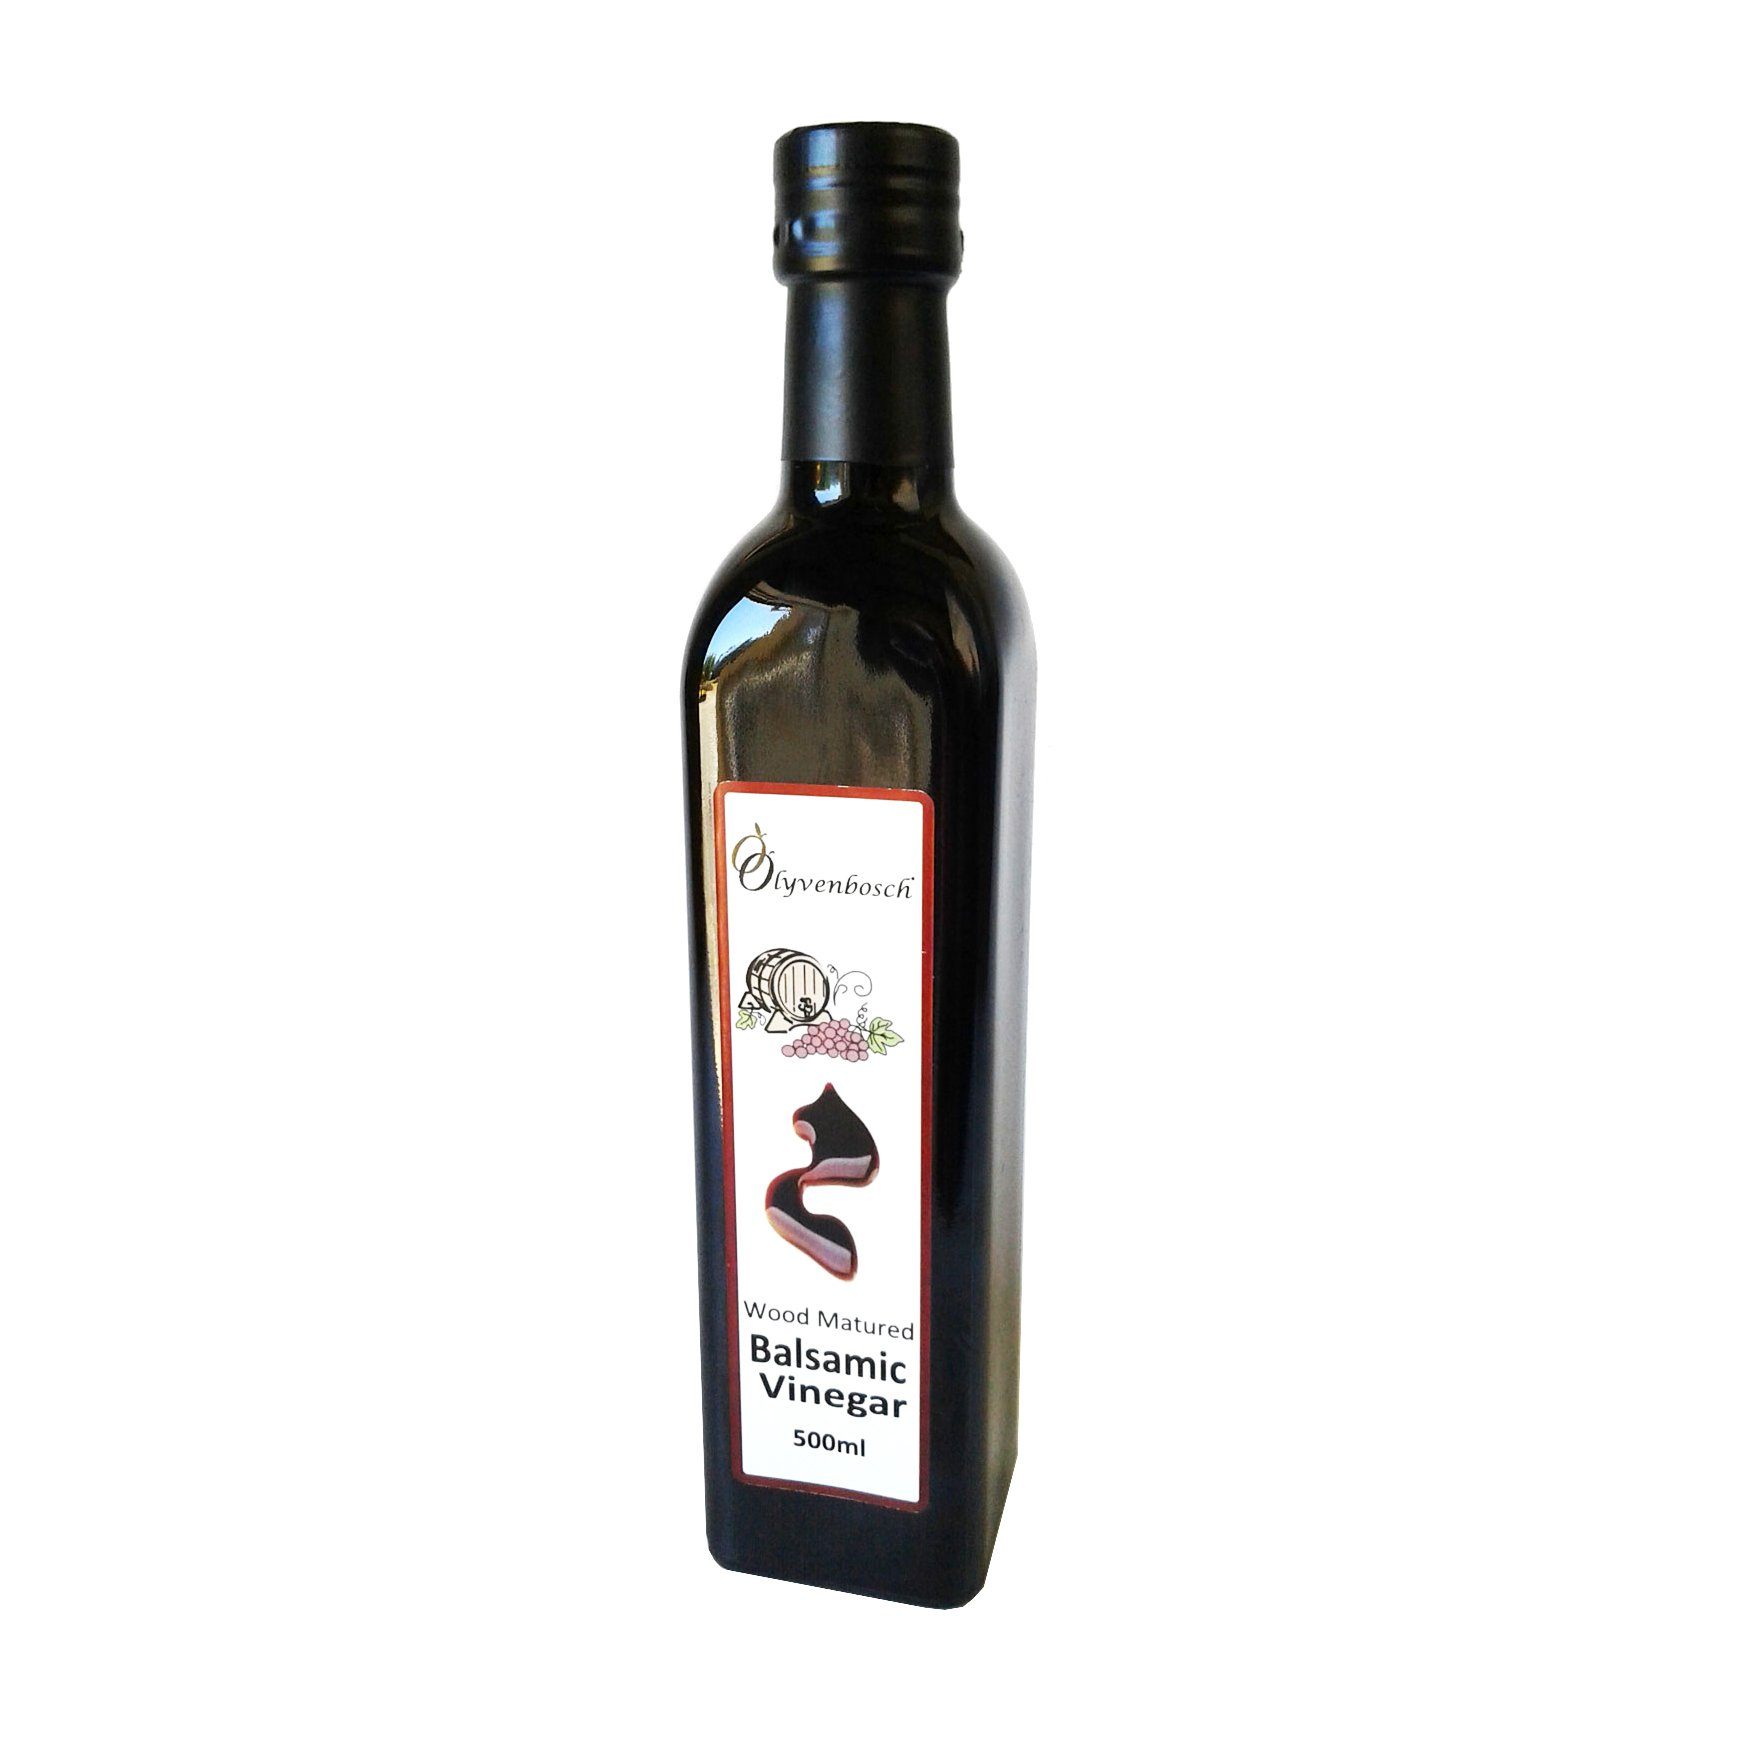 Olyvenbosch Wood-Matured Balsamic Vinegar 500ml Glass Bottle food Olyvenbosch Olive Farm